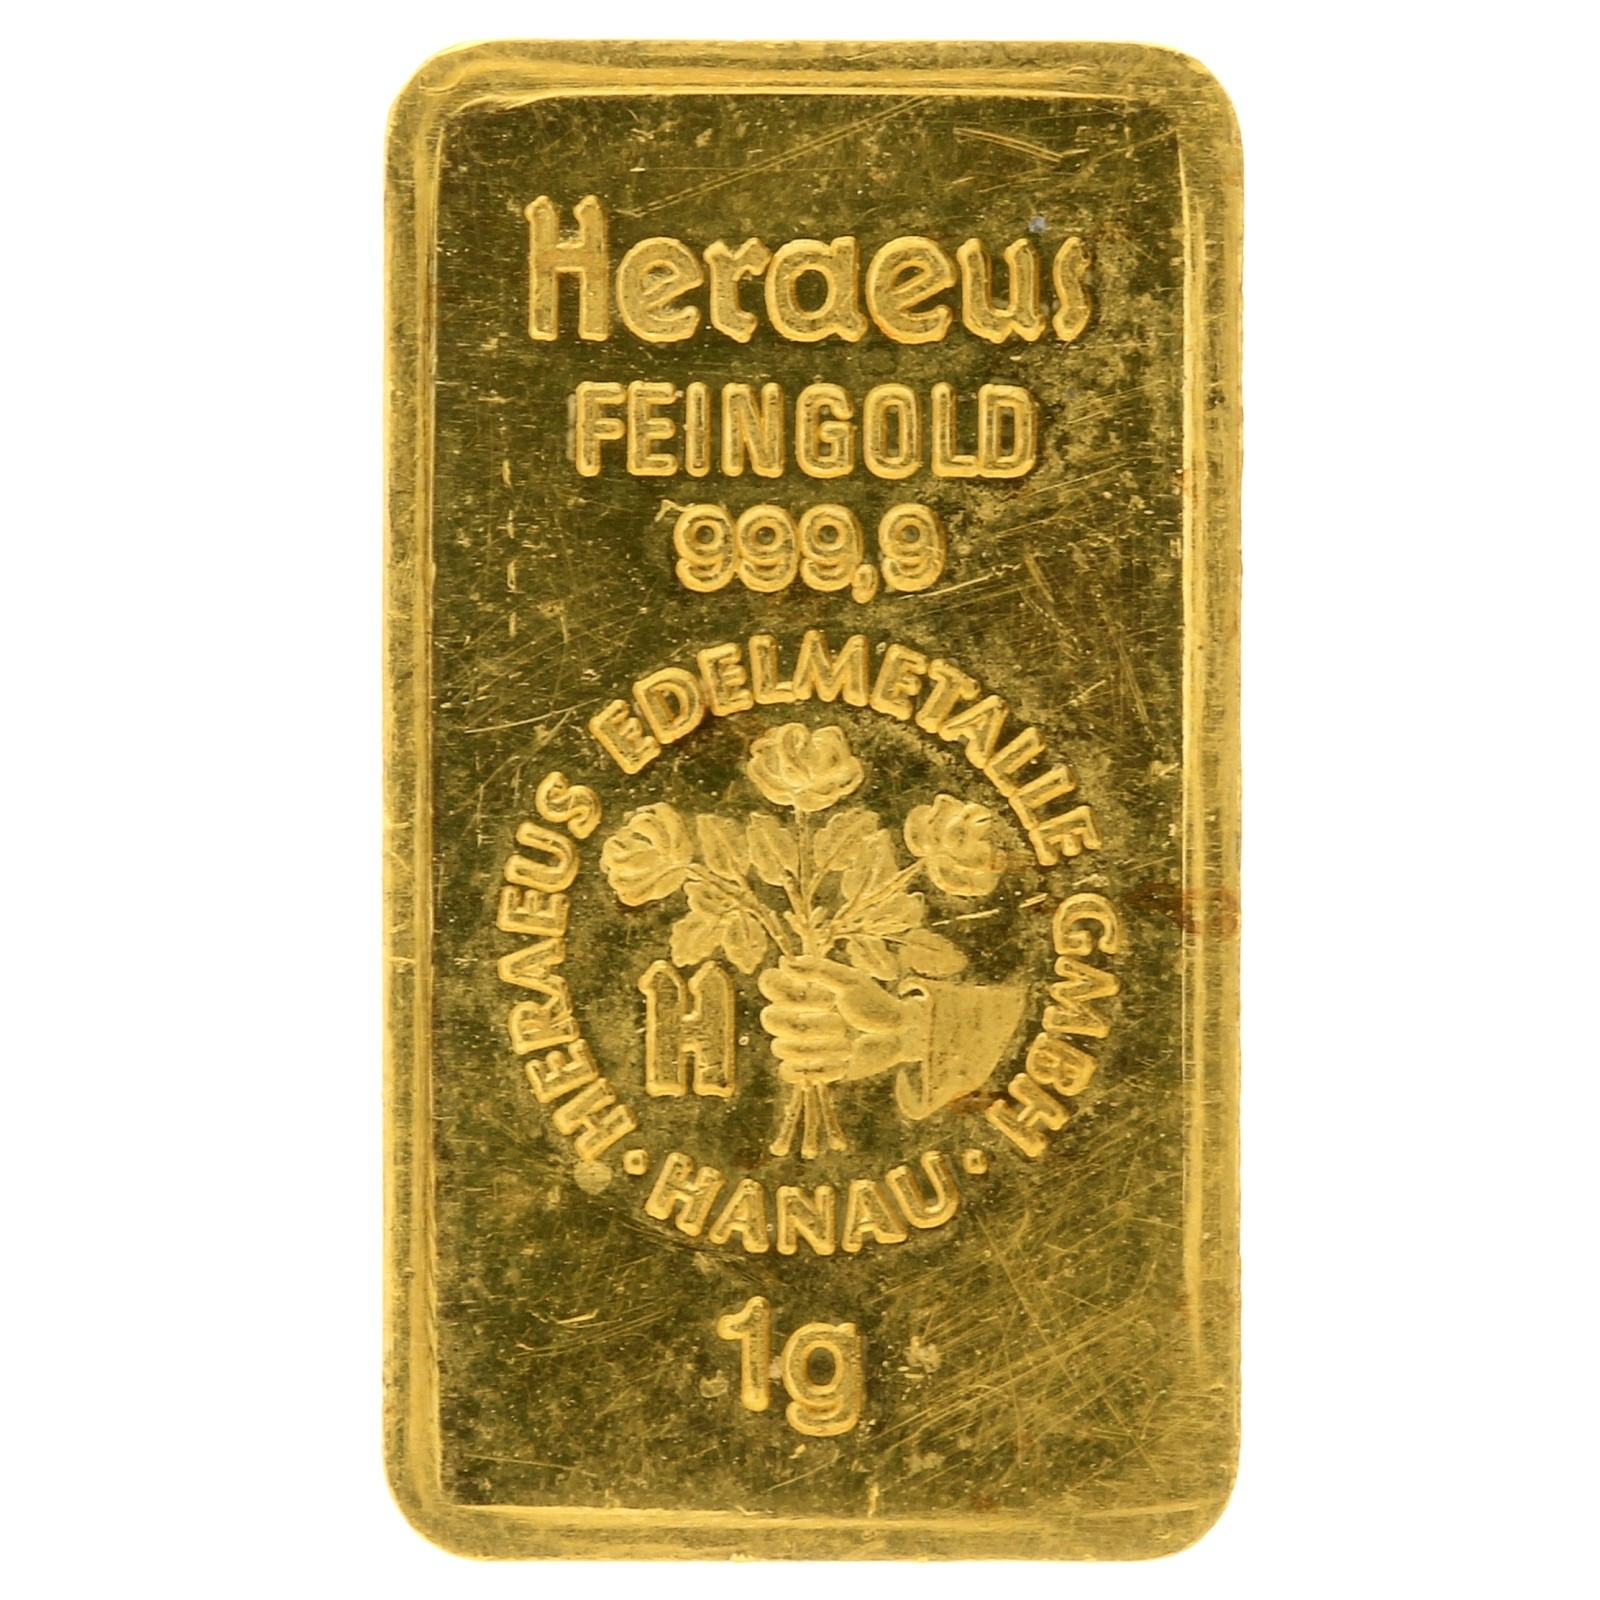 Heraeus - 1 gram fine gold - Bar